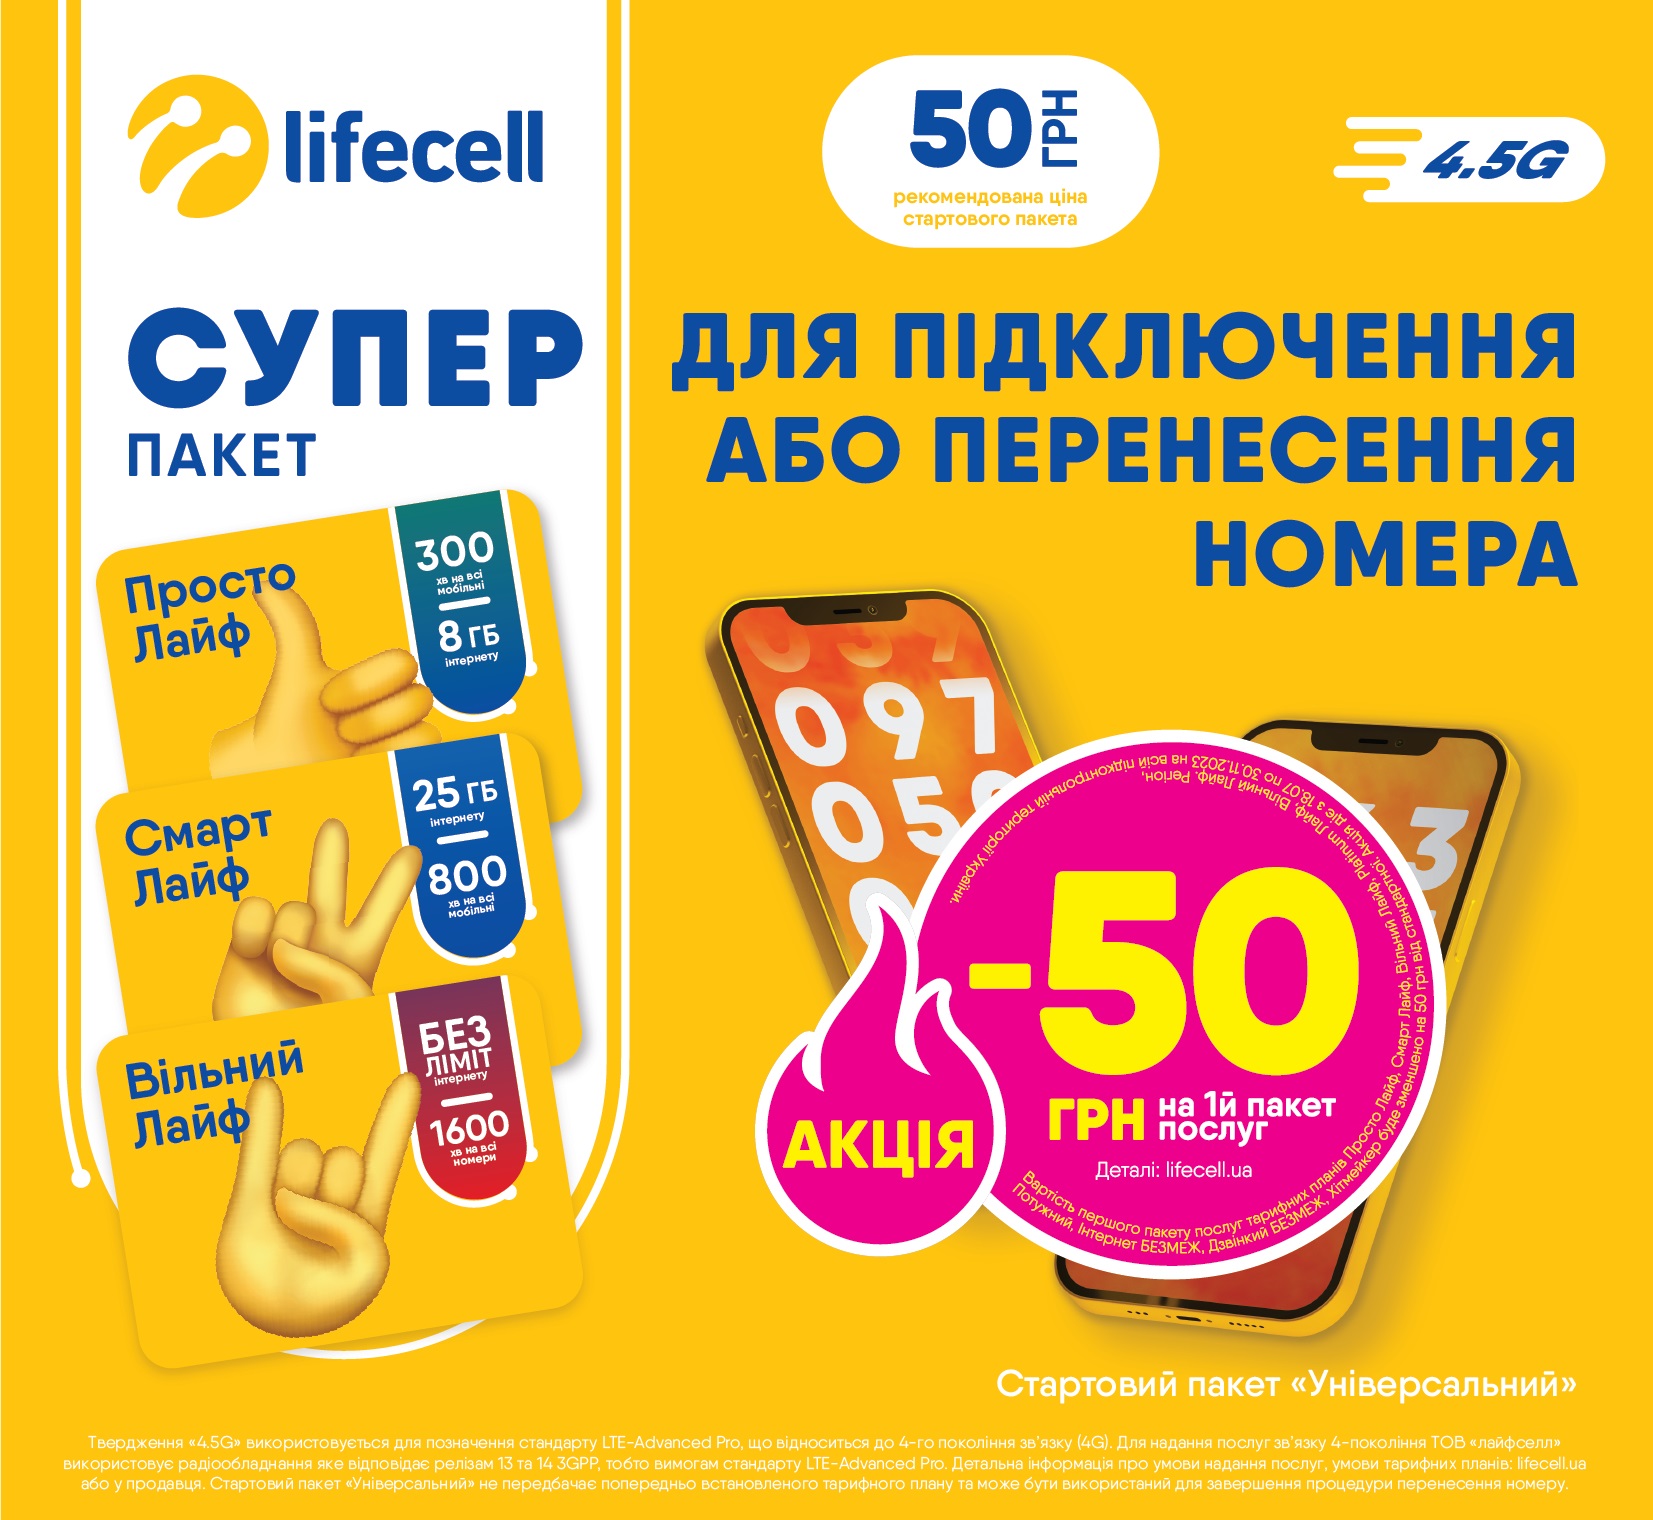 Стартовый пакет lifecell "Універсальний без 1-го місяця" в Киеве